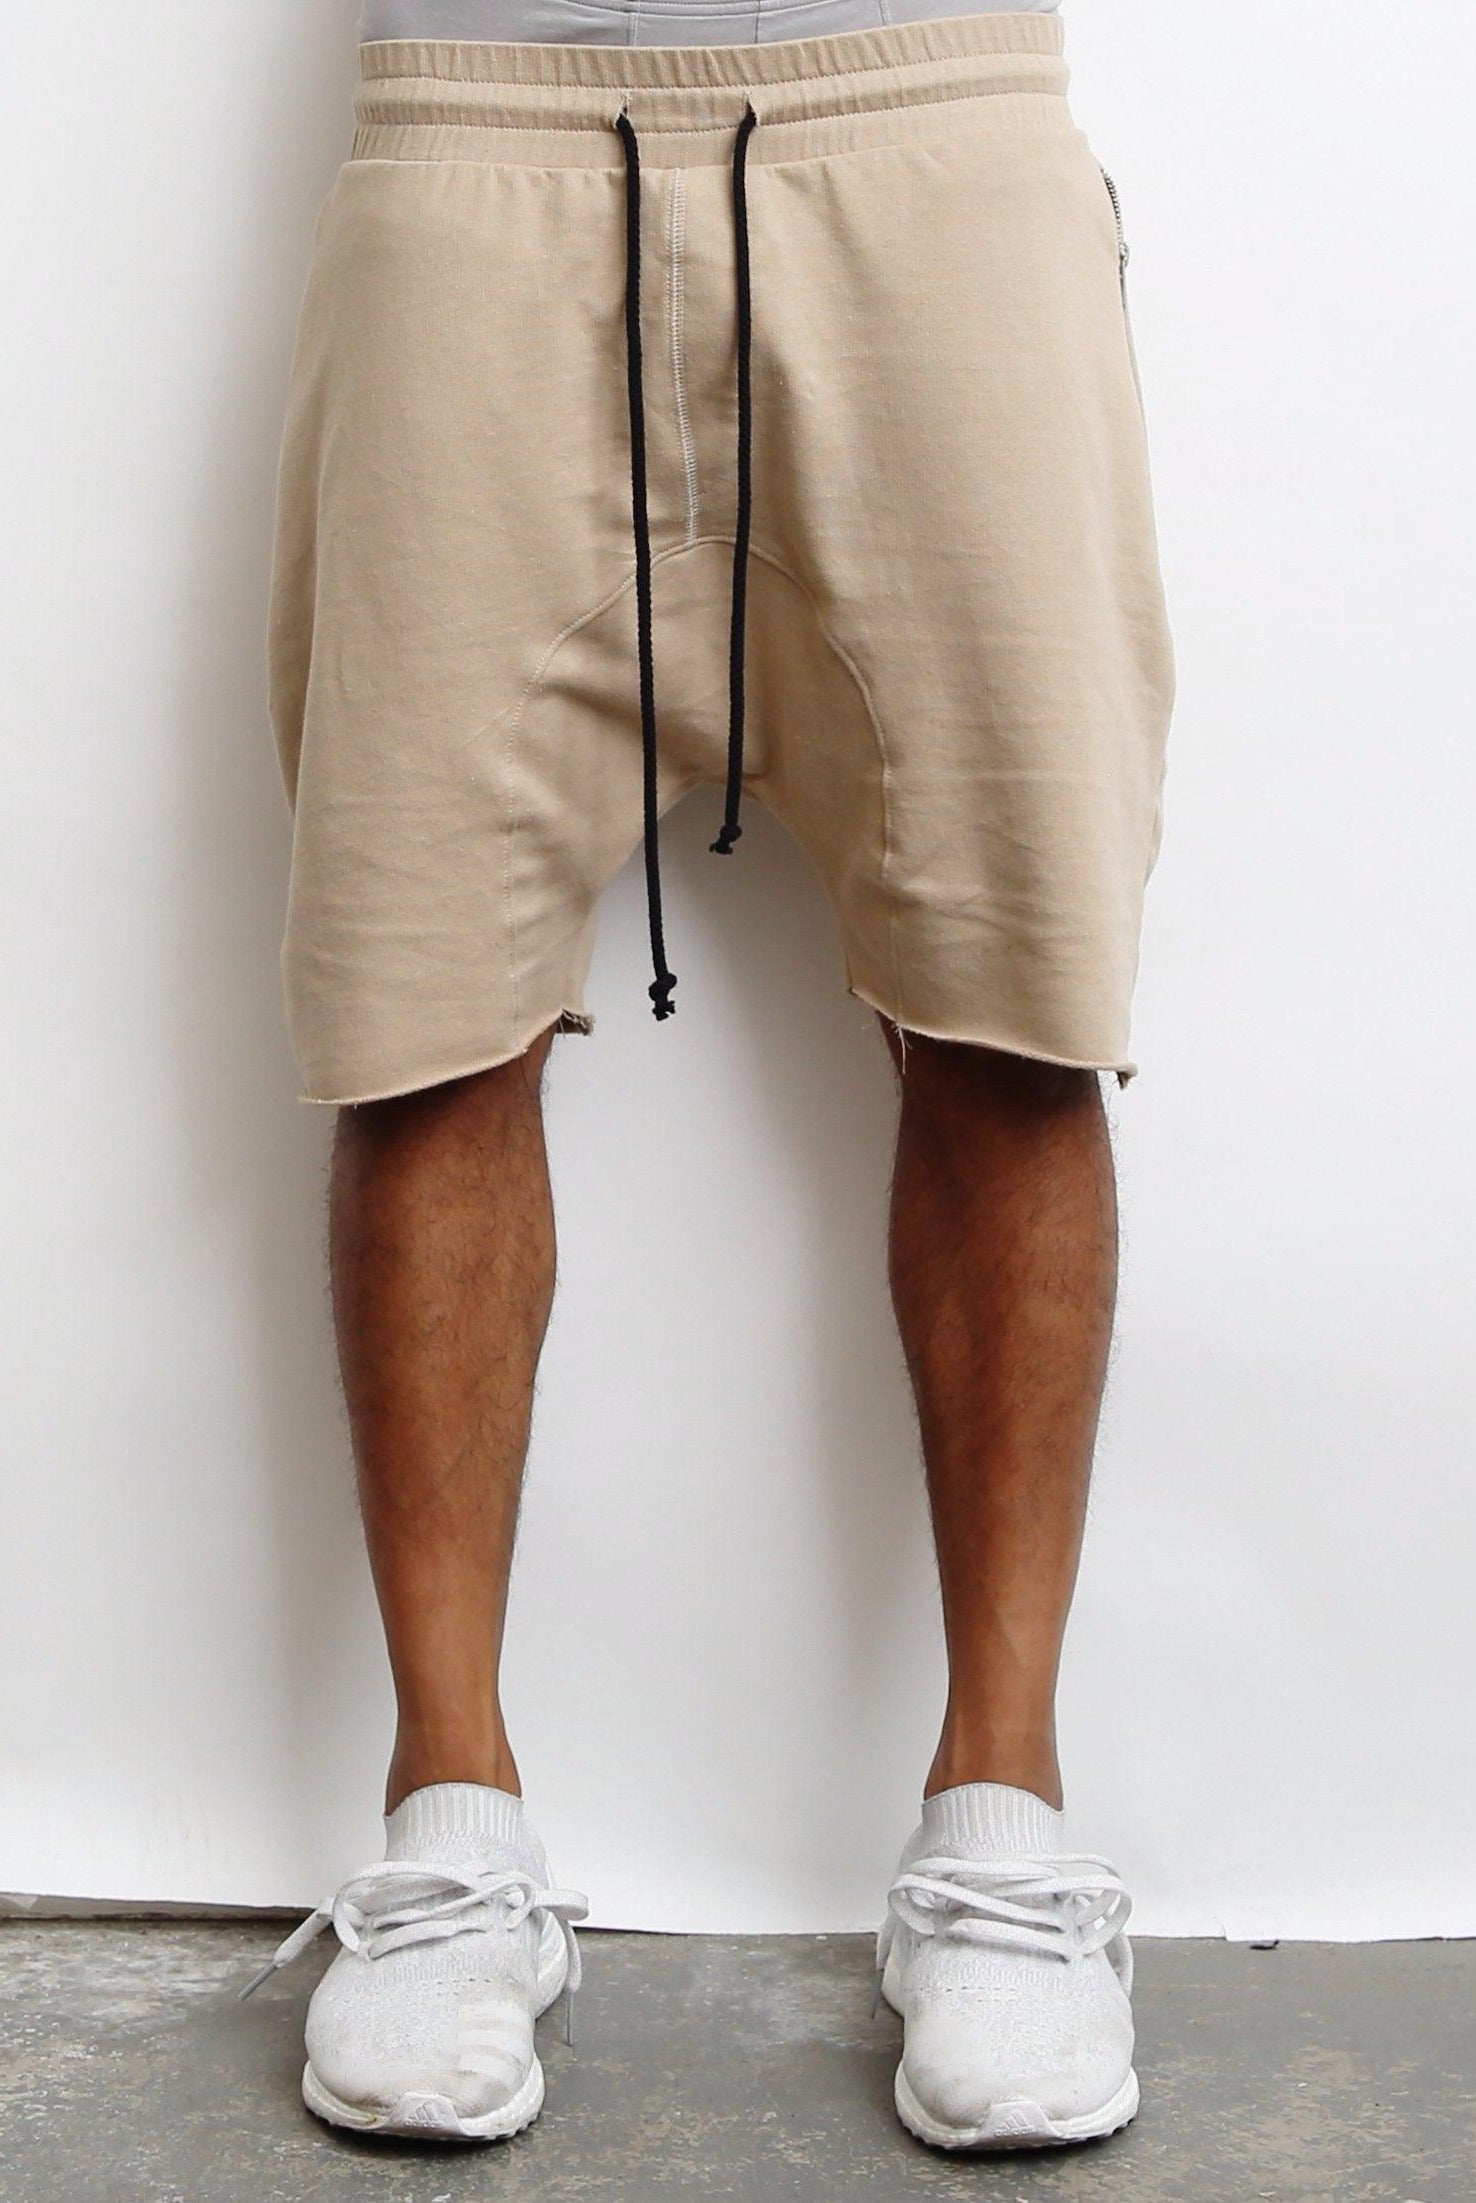 Men's Shorts Mens Khaki Beige Drawstring Raw City Cut Shorts